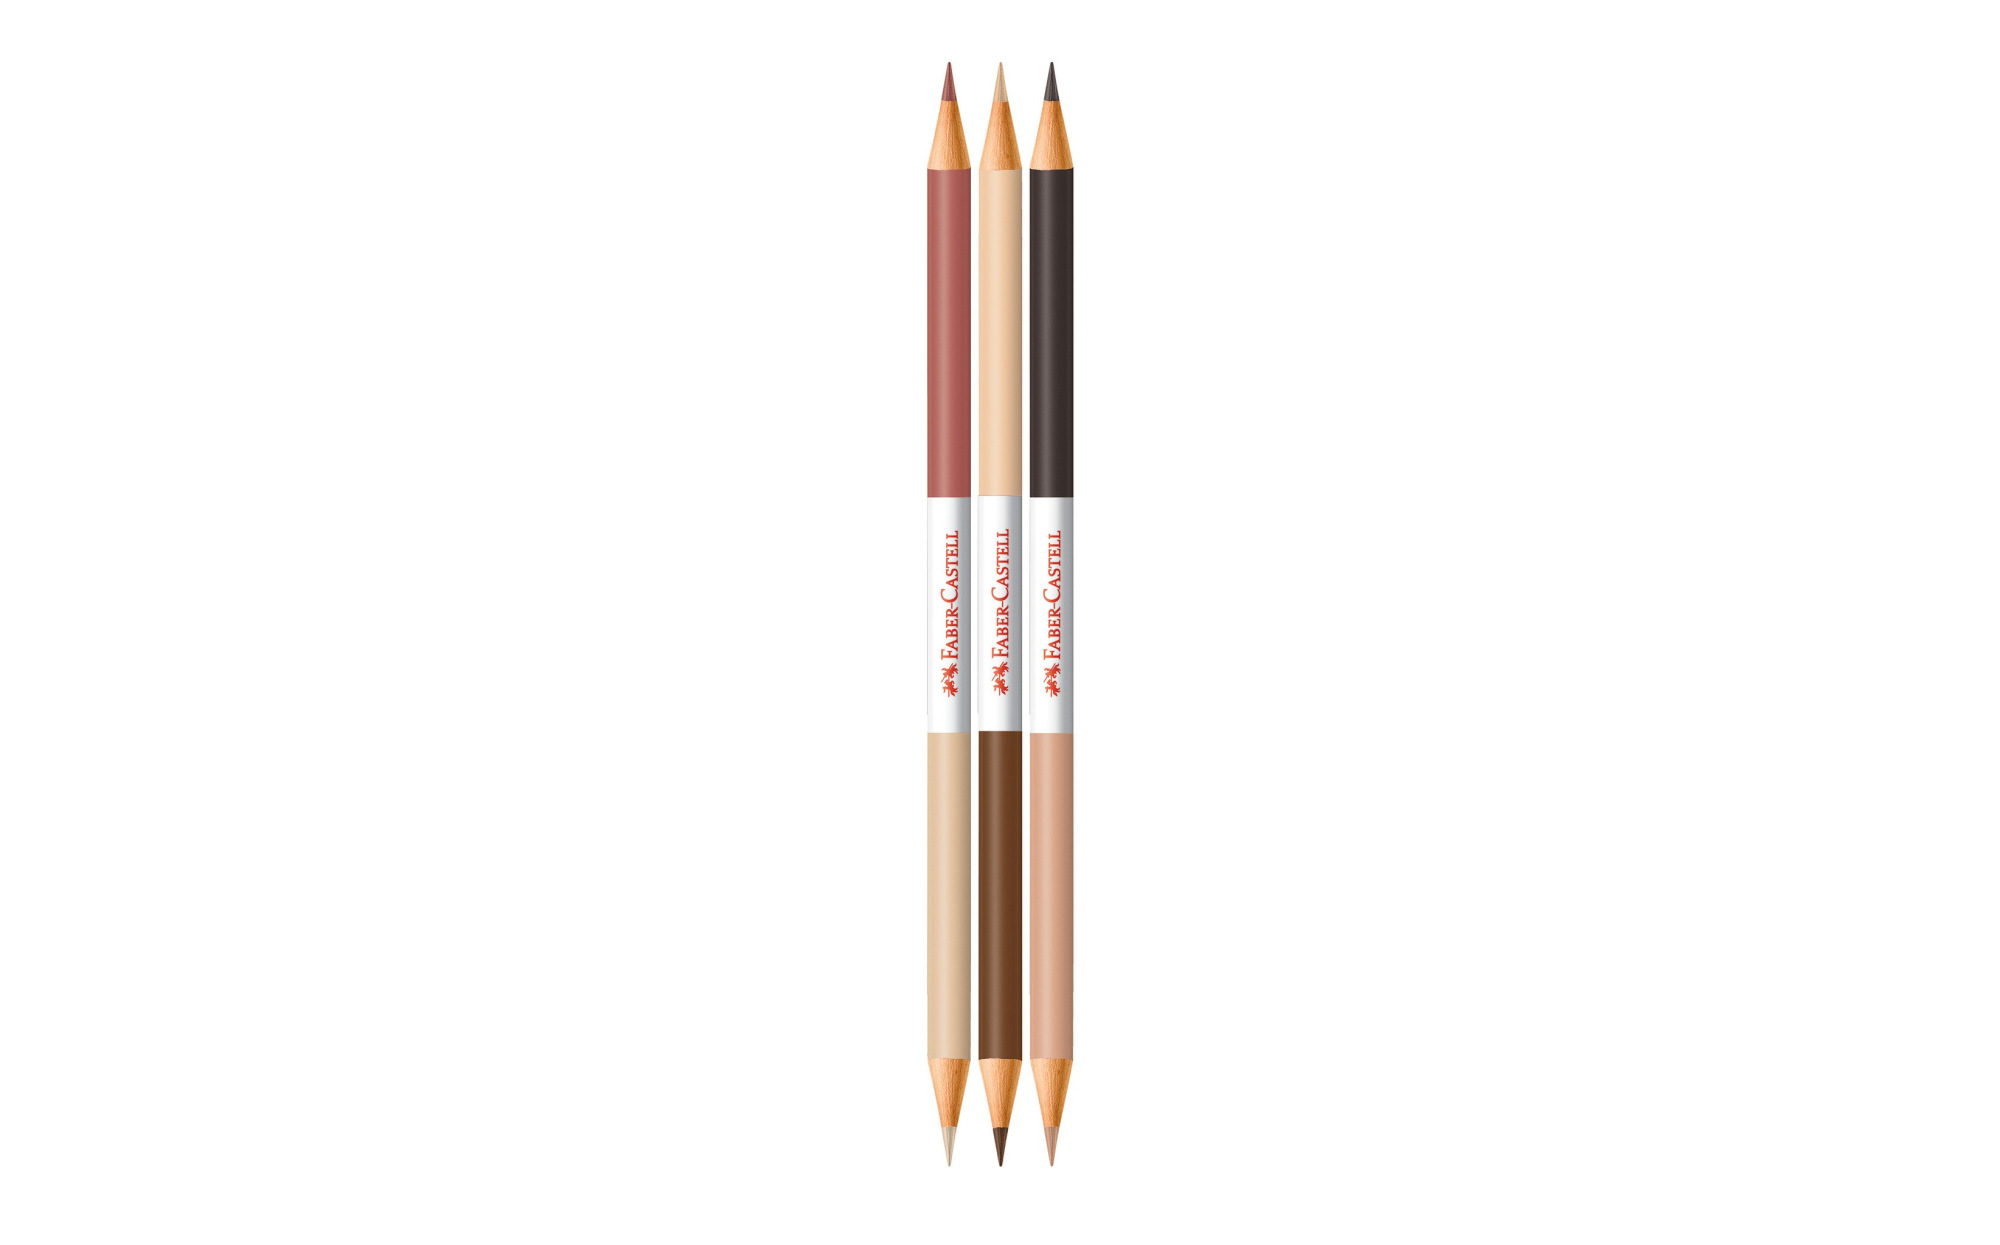 Faber-castell Classic Colour Pencils Skin Tone Pack 10